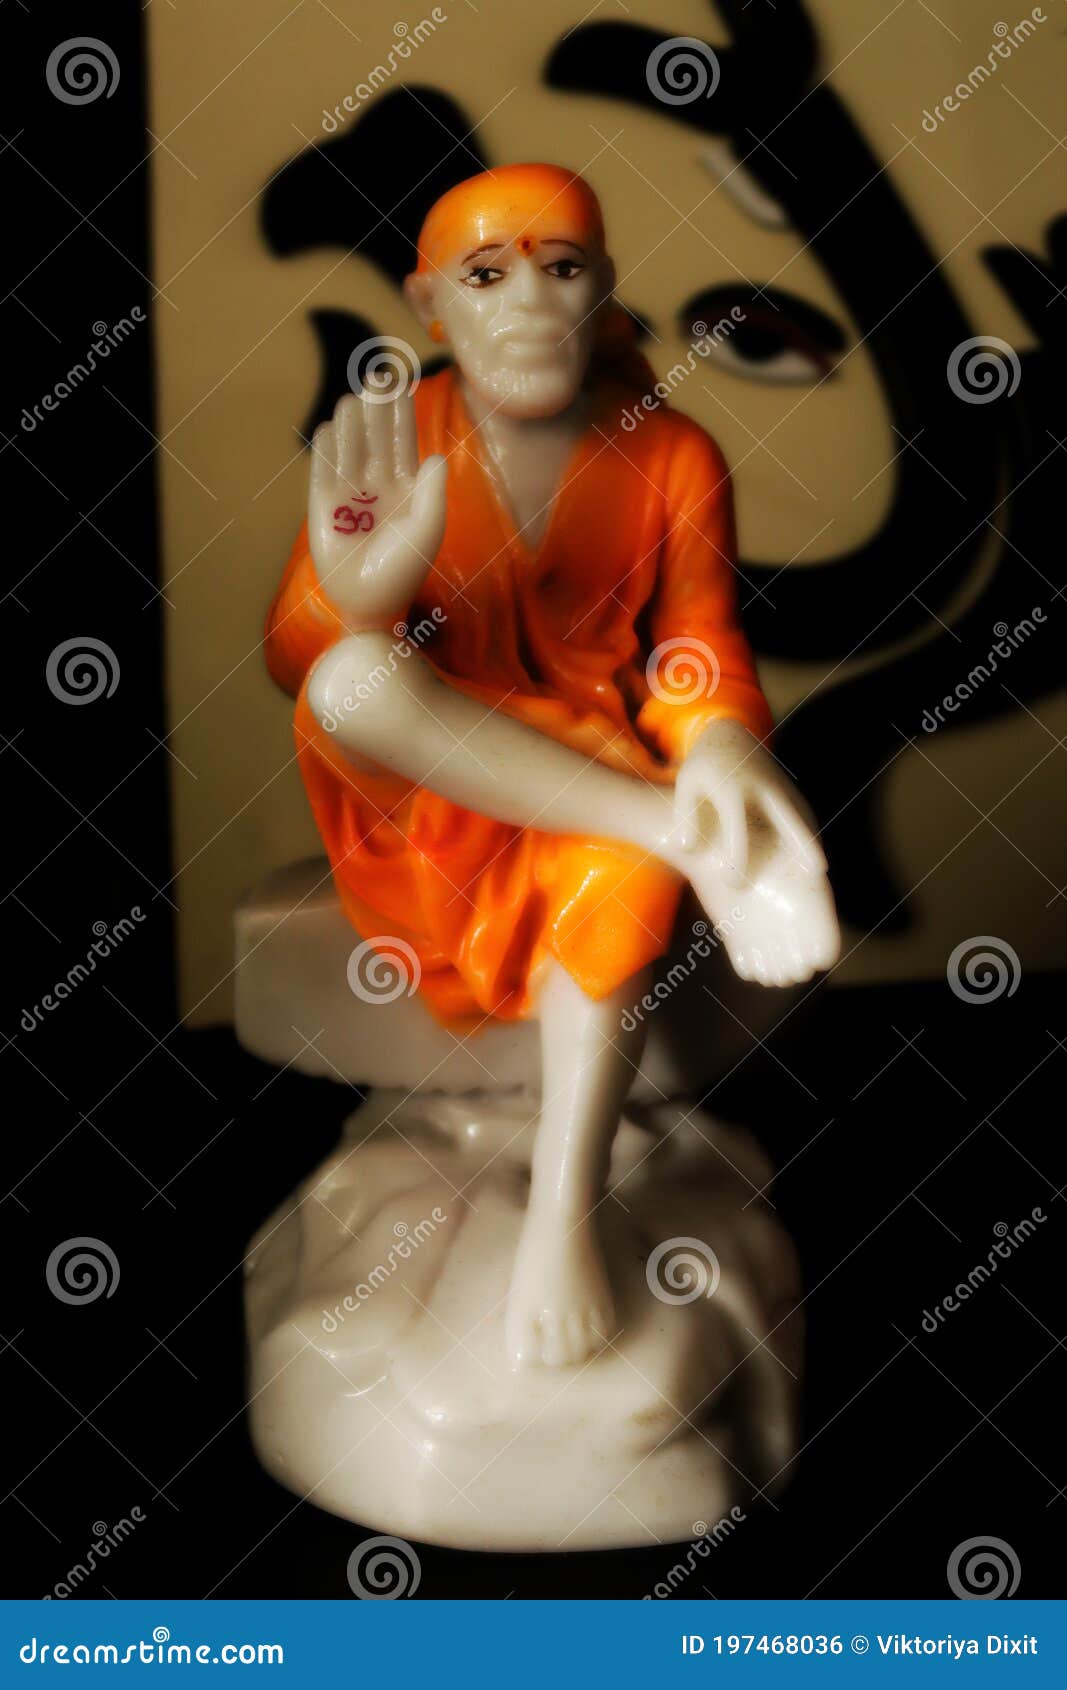 Blessing from Sai Baba God stock photo. Image of idol - 197468036